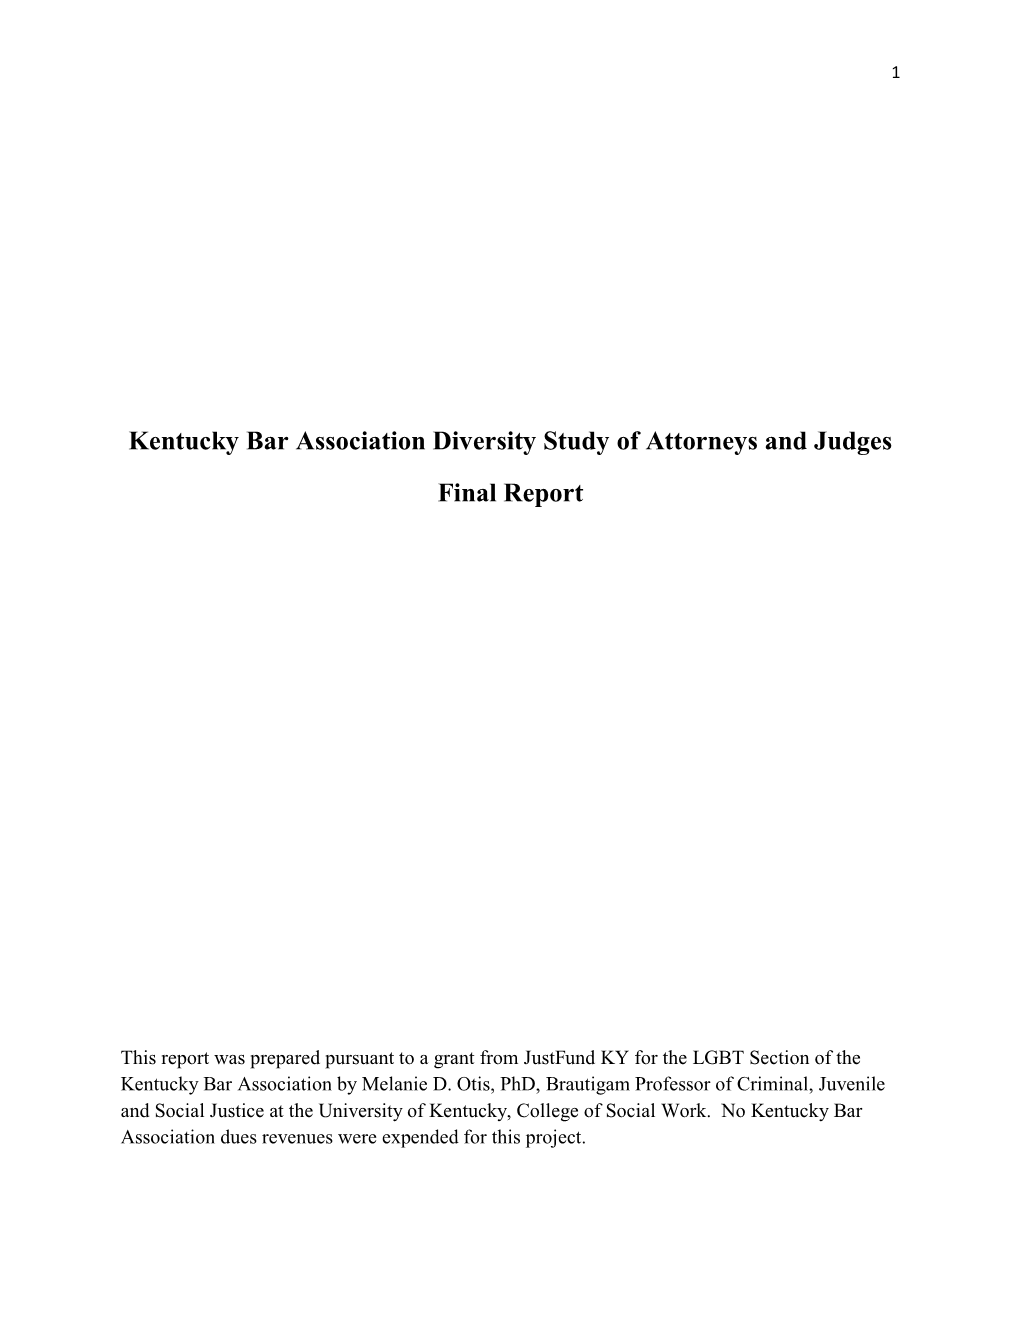 Kentucky Bar Association Diversity Study of Attorneys and Judges Final Report